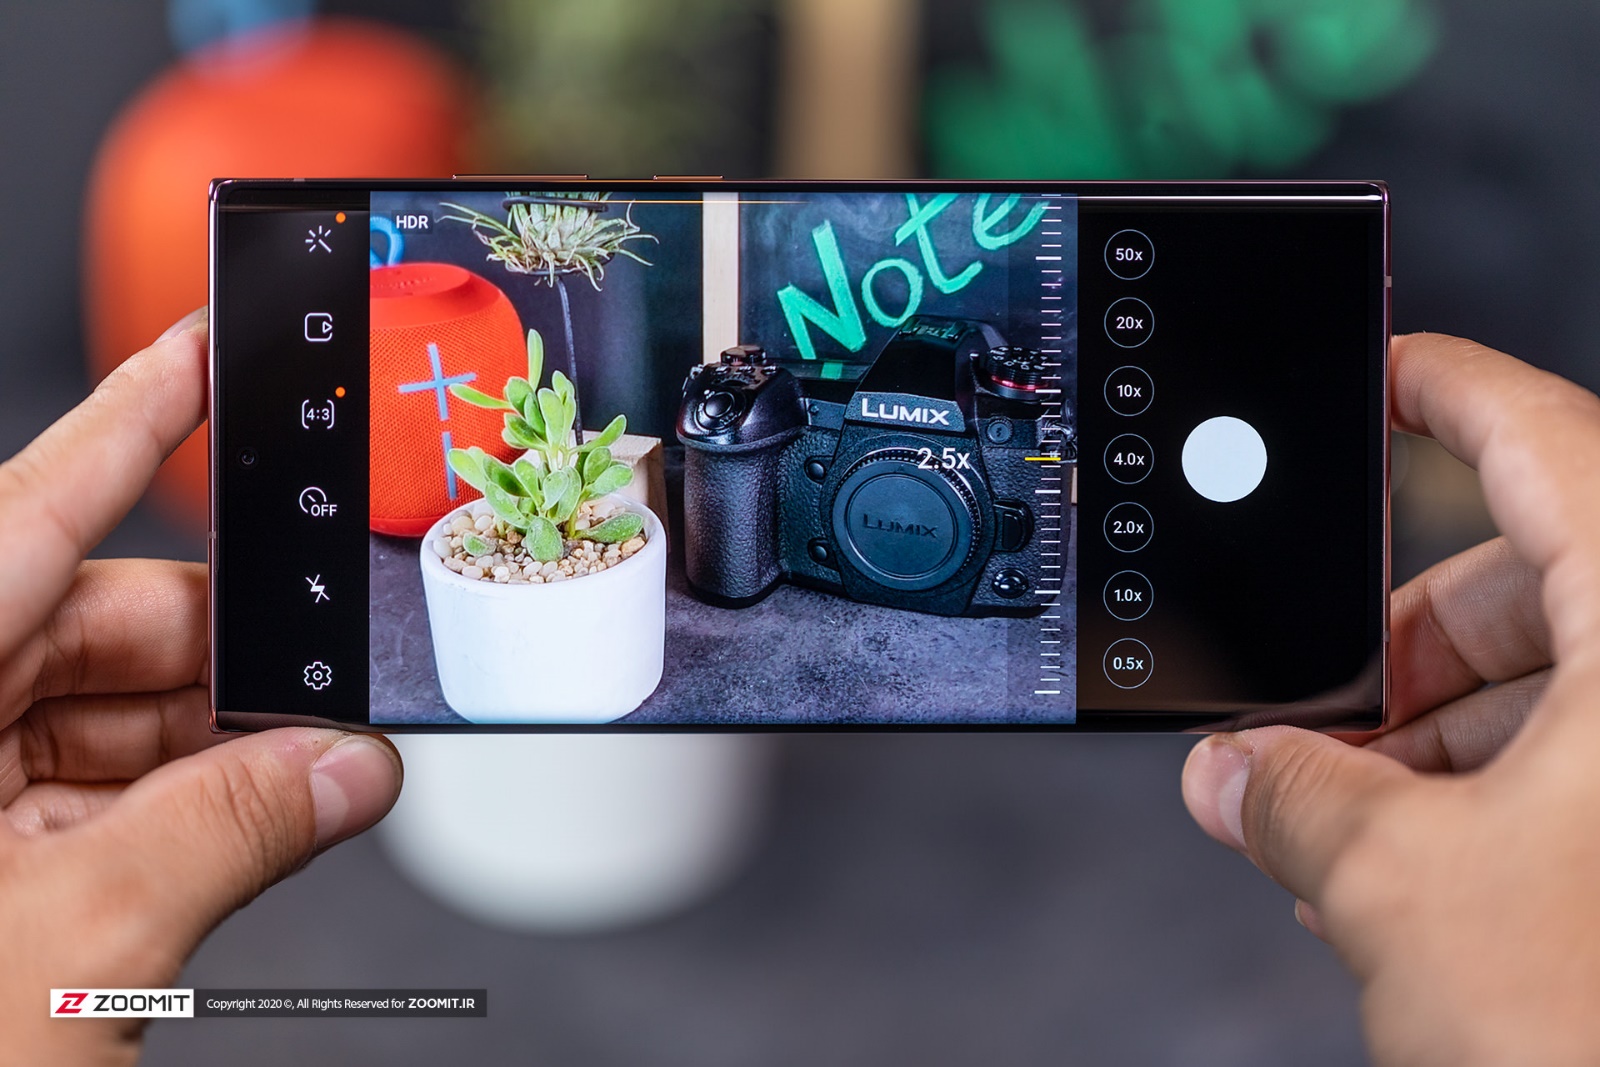 Samsung Galaxy Note 20 Ultra camera user interface